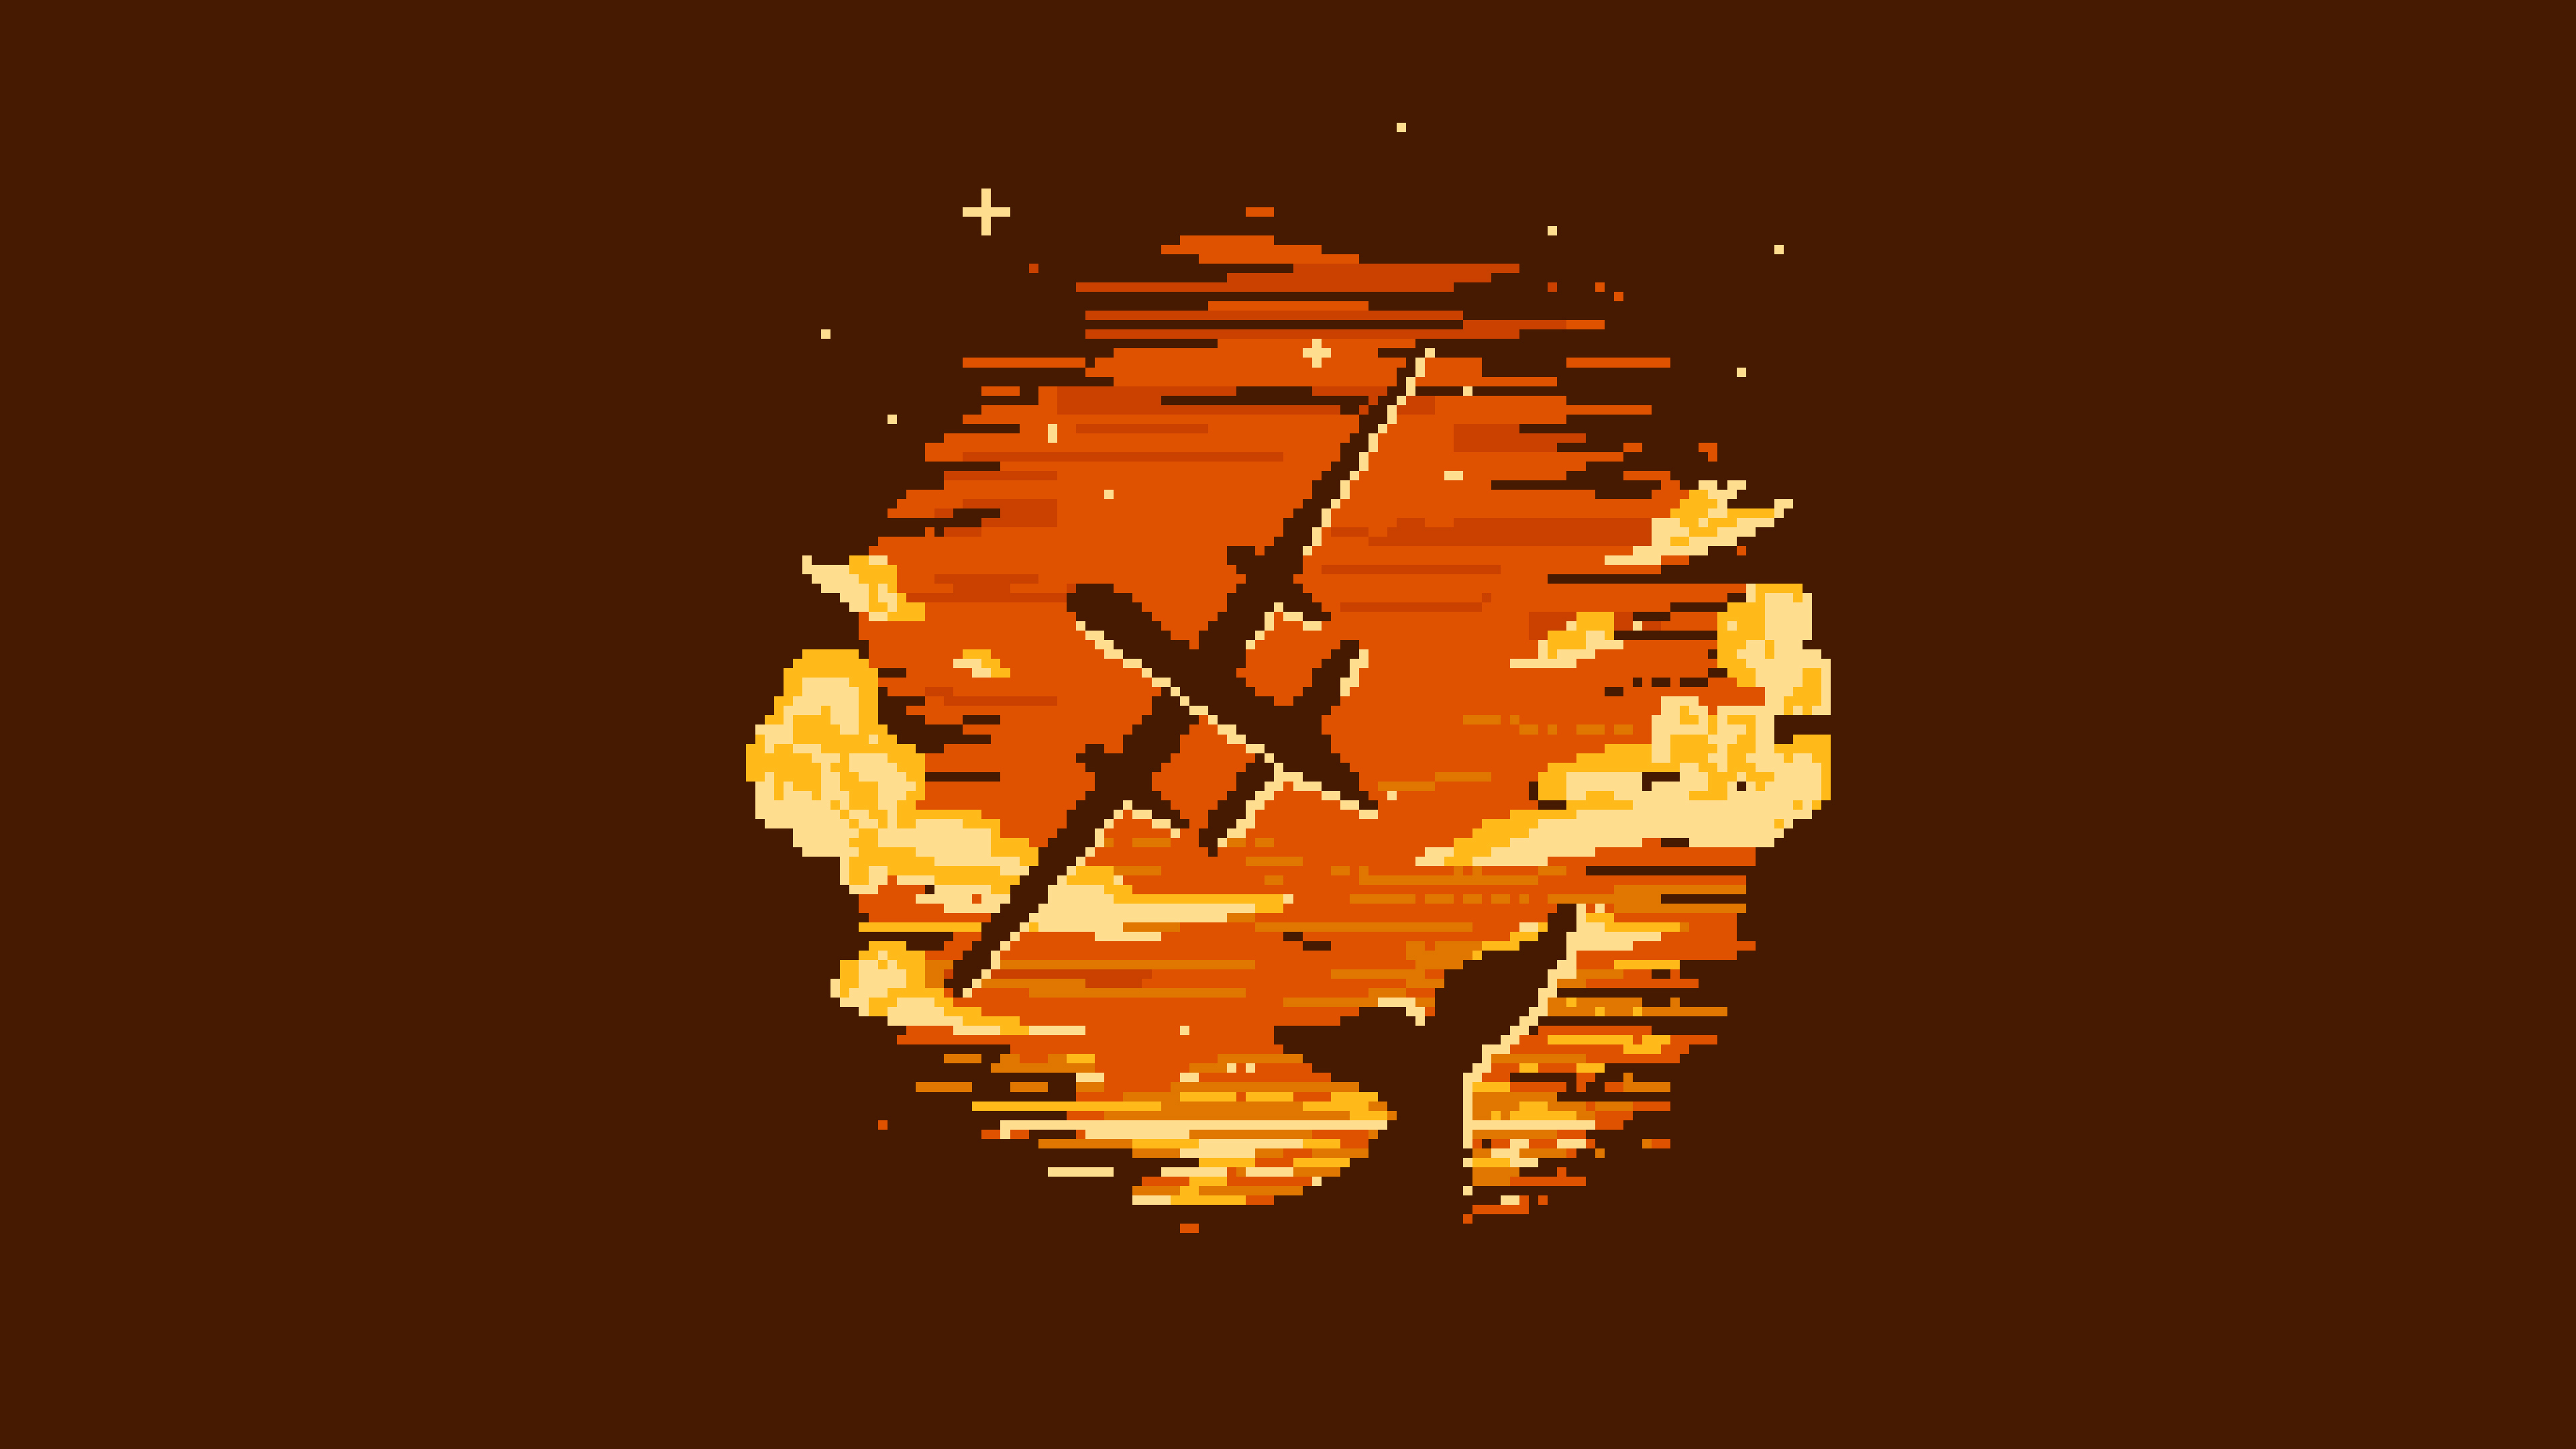 General 3840x2160 airplane orca sunset tribute pixel art orange simple background digital art